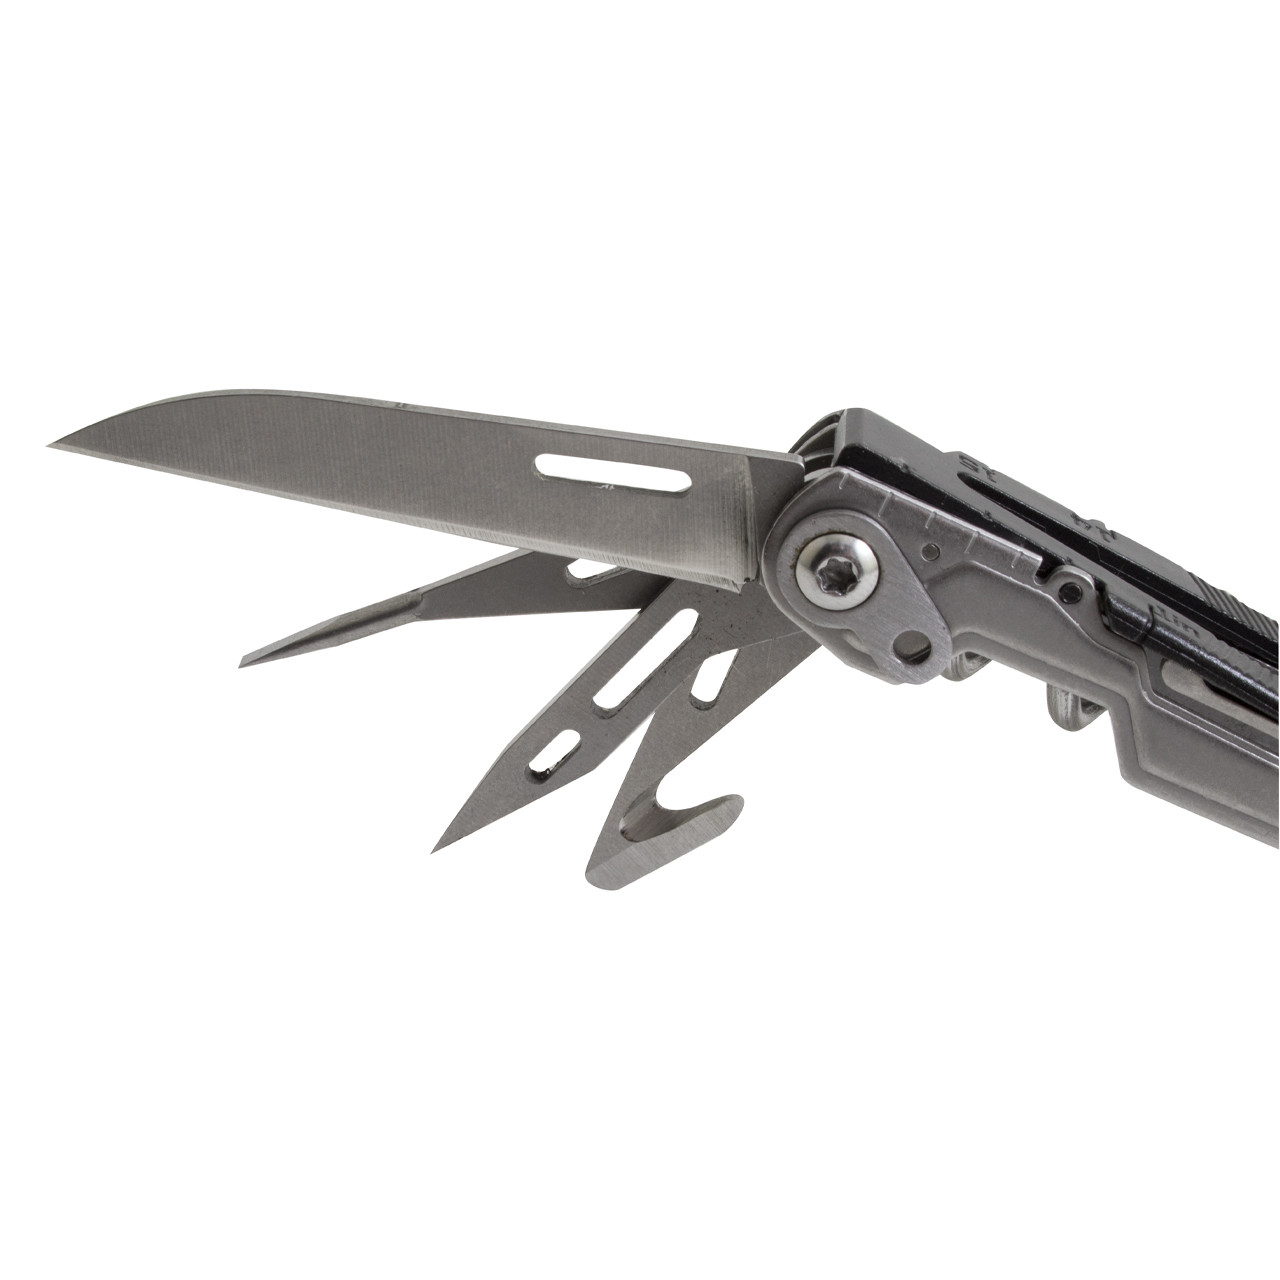 Multifunction knives: SOG Powerlitre multi-tool